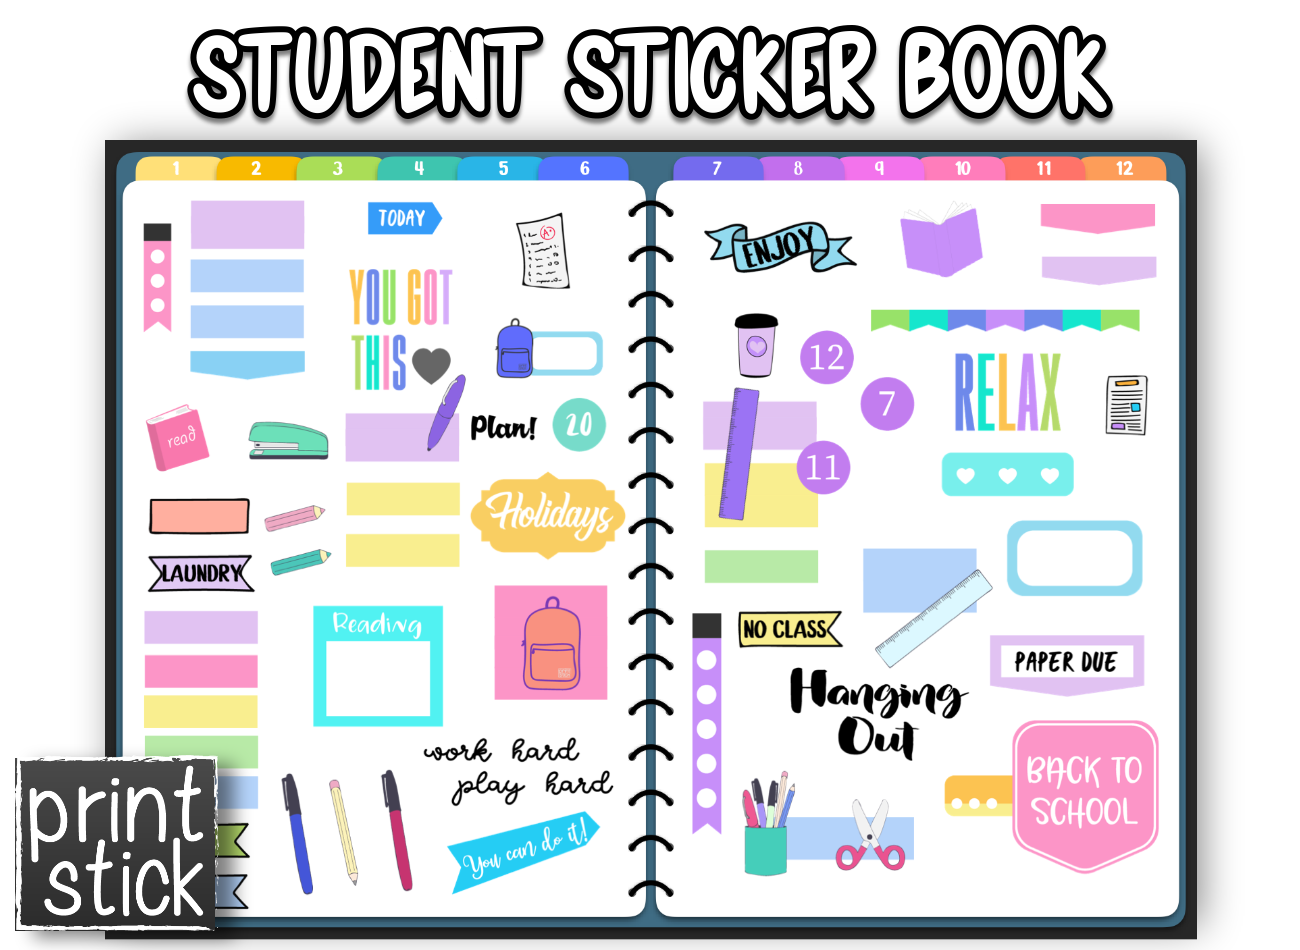 Bo4 - All Sticker Books - Choose one - Print Stick